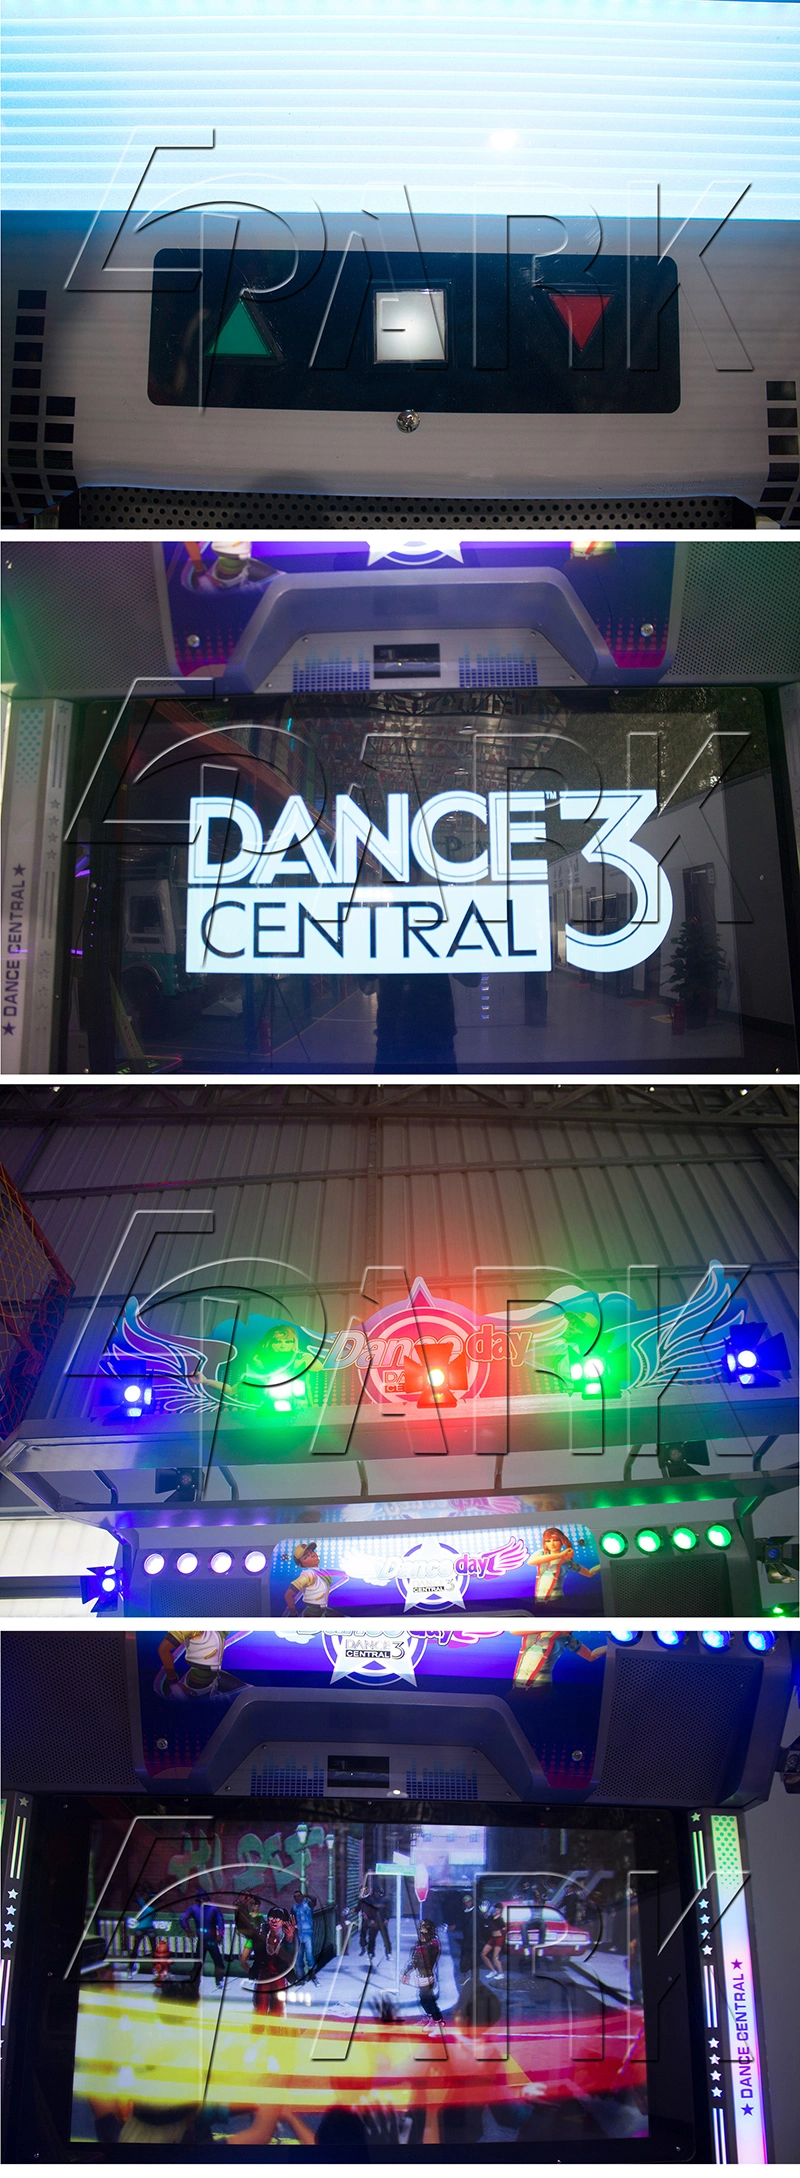 Danz Base Dance Music Amusement Arcade Video Game Console